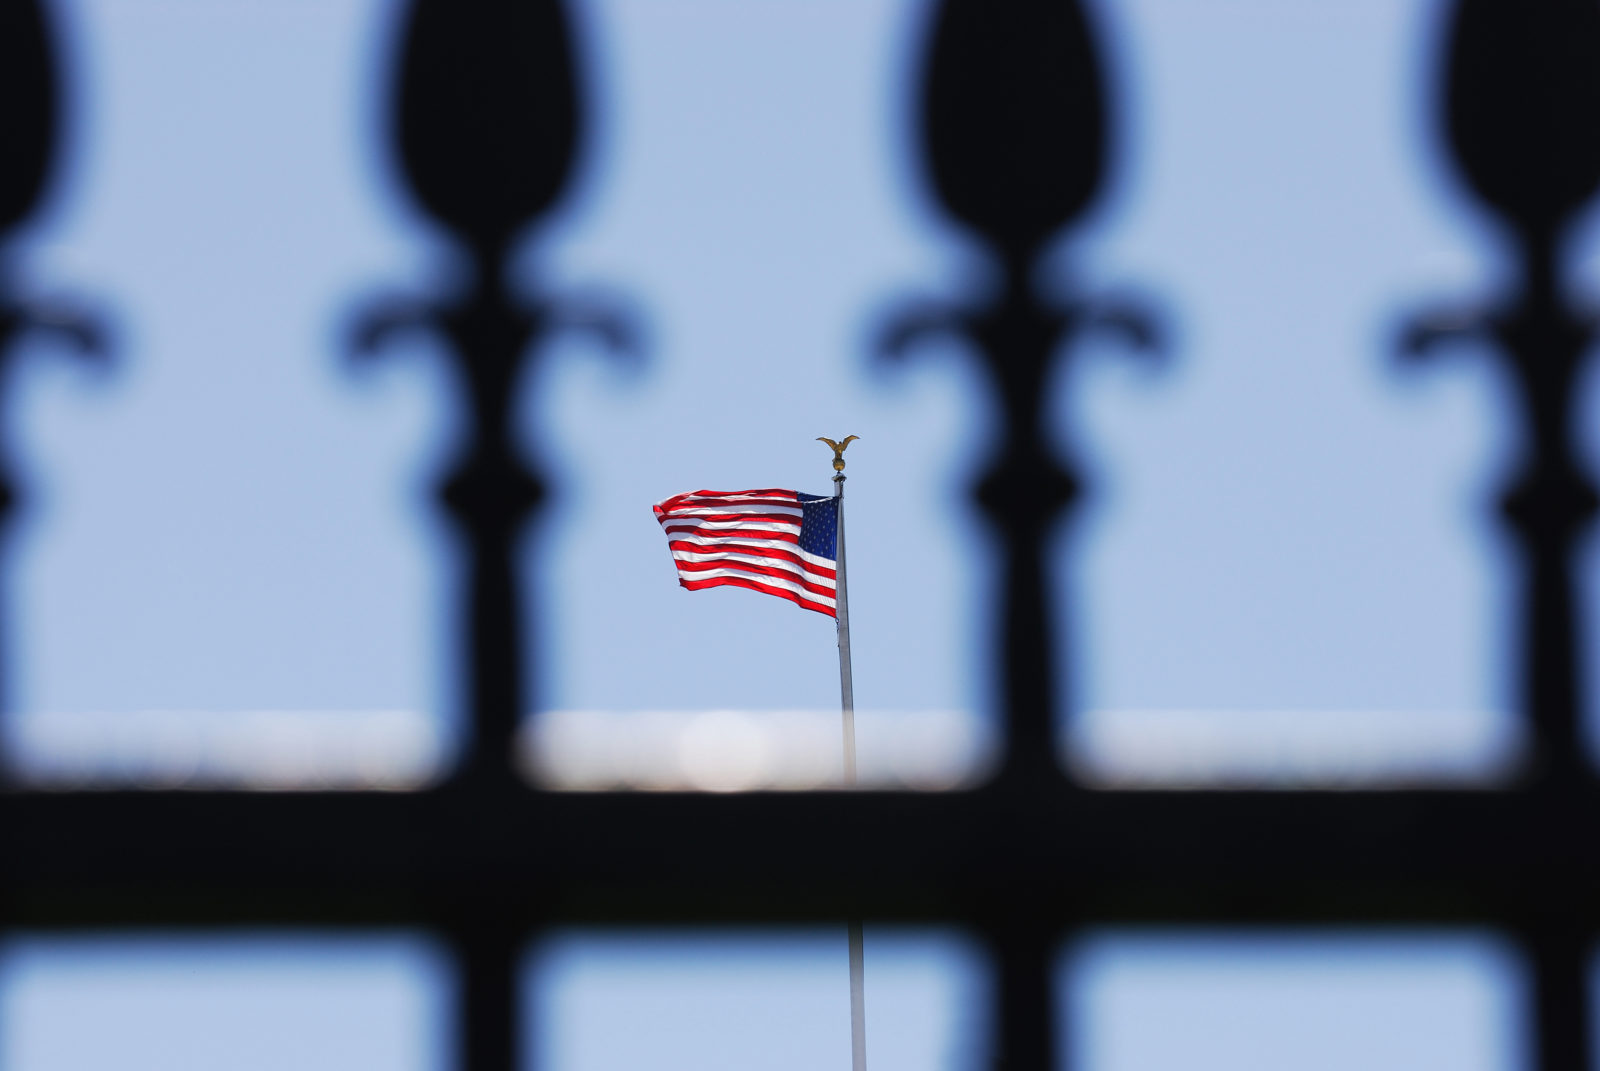 USA flag on pole behind iron fence